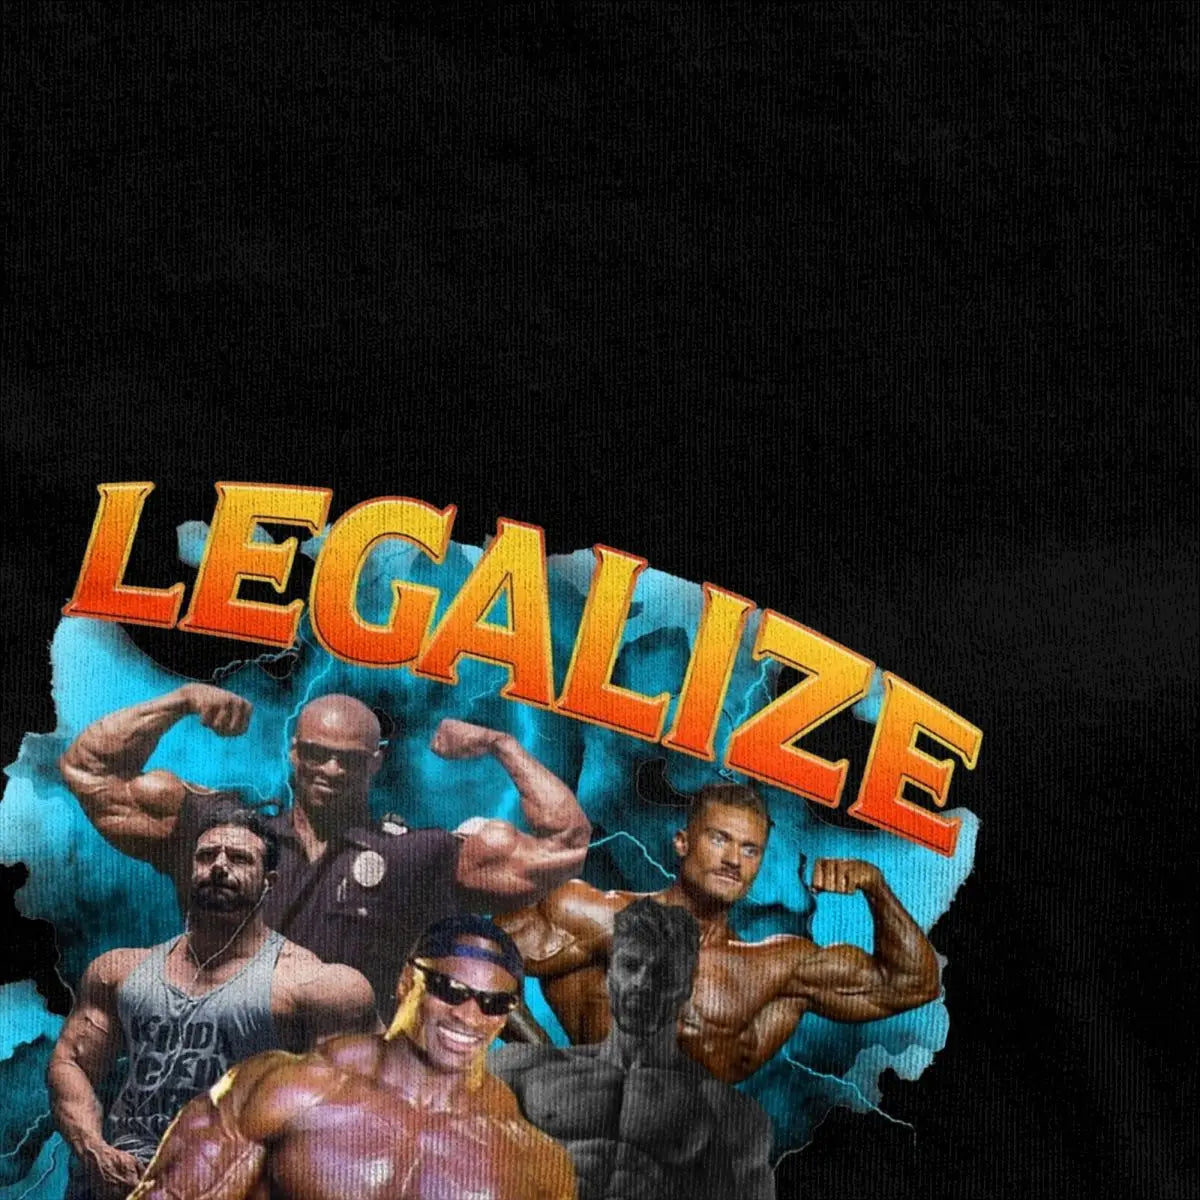 "LEGALIZE TREN" Men's T-Shirt